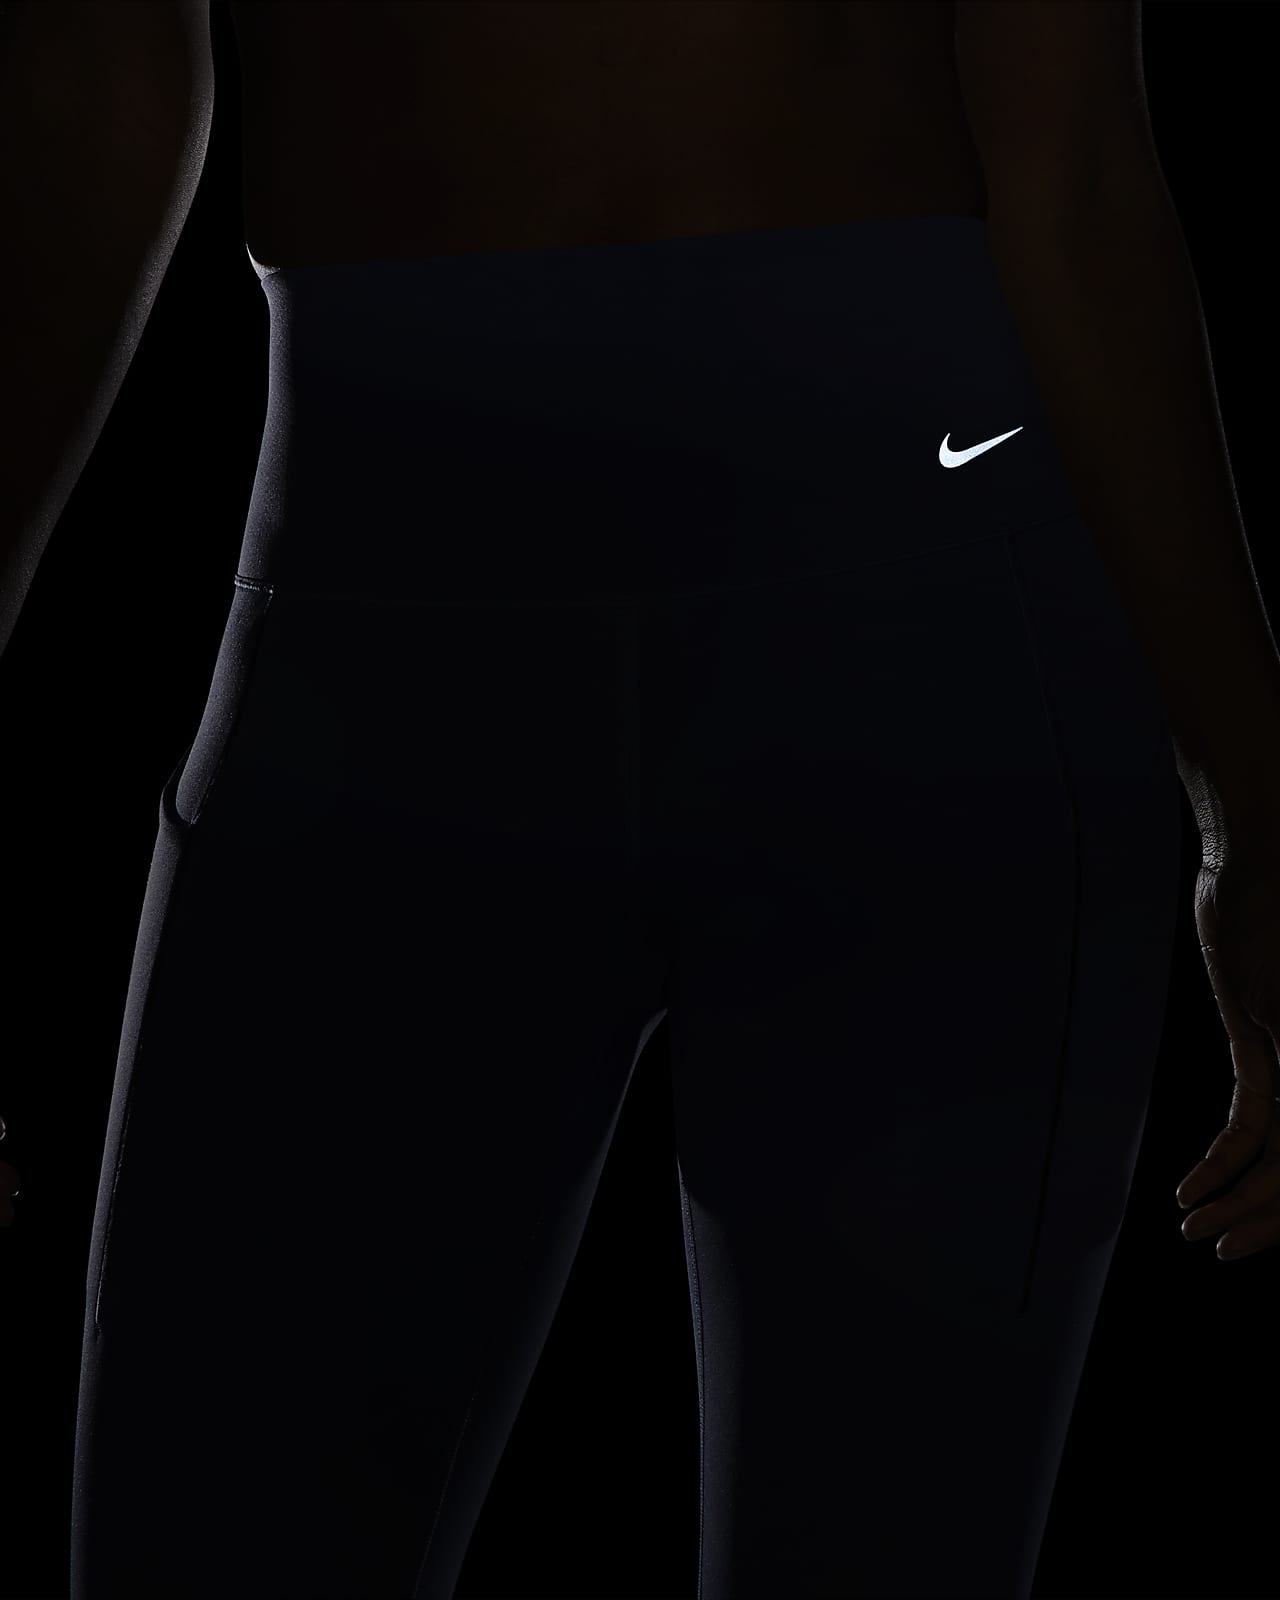 Nike Universa High Waist 7/8 Leggings w/ Pockets - Women's Small